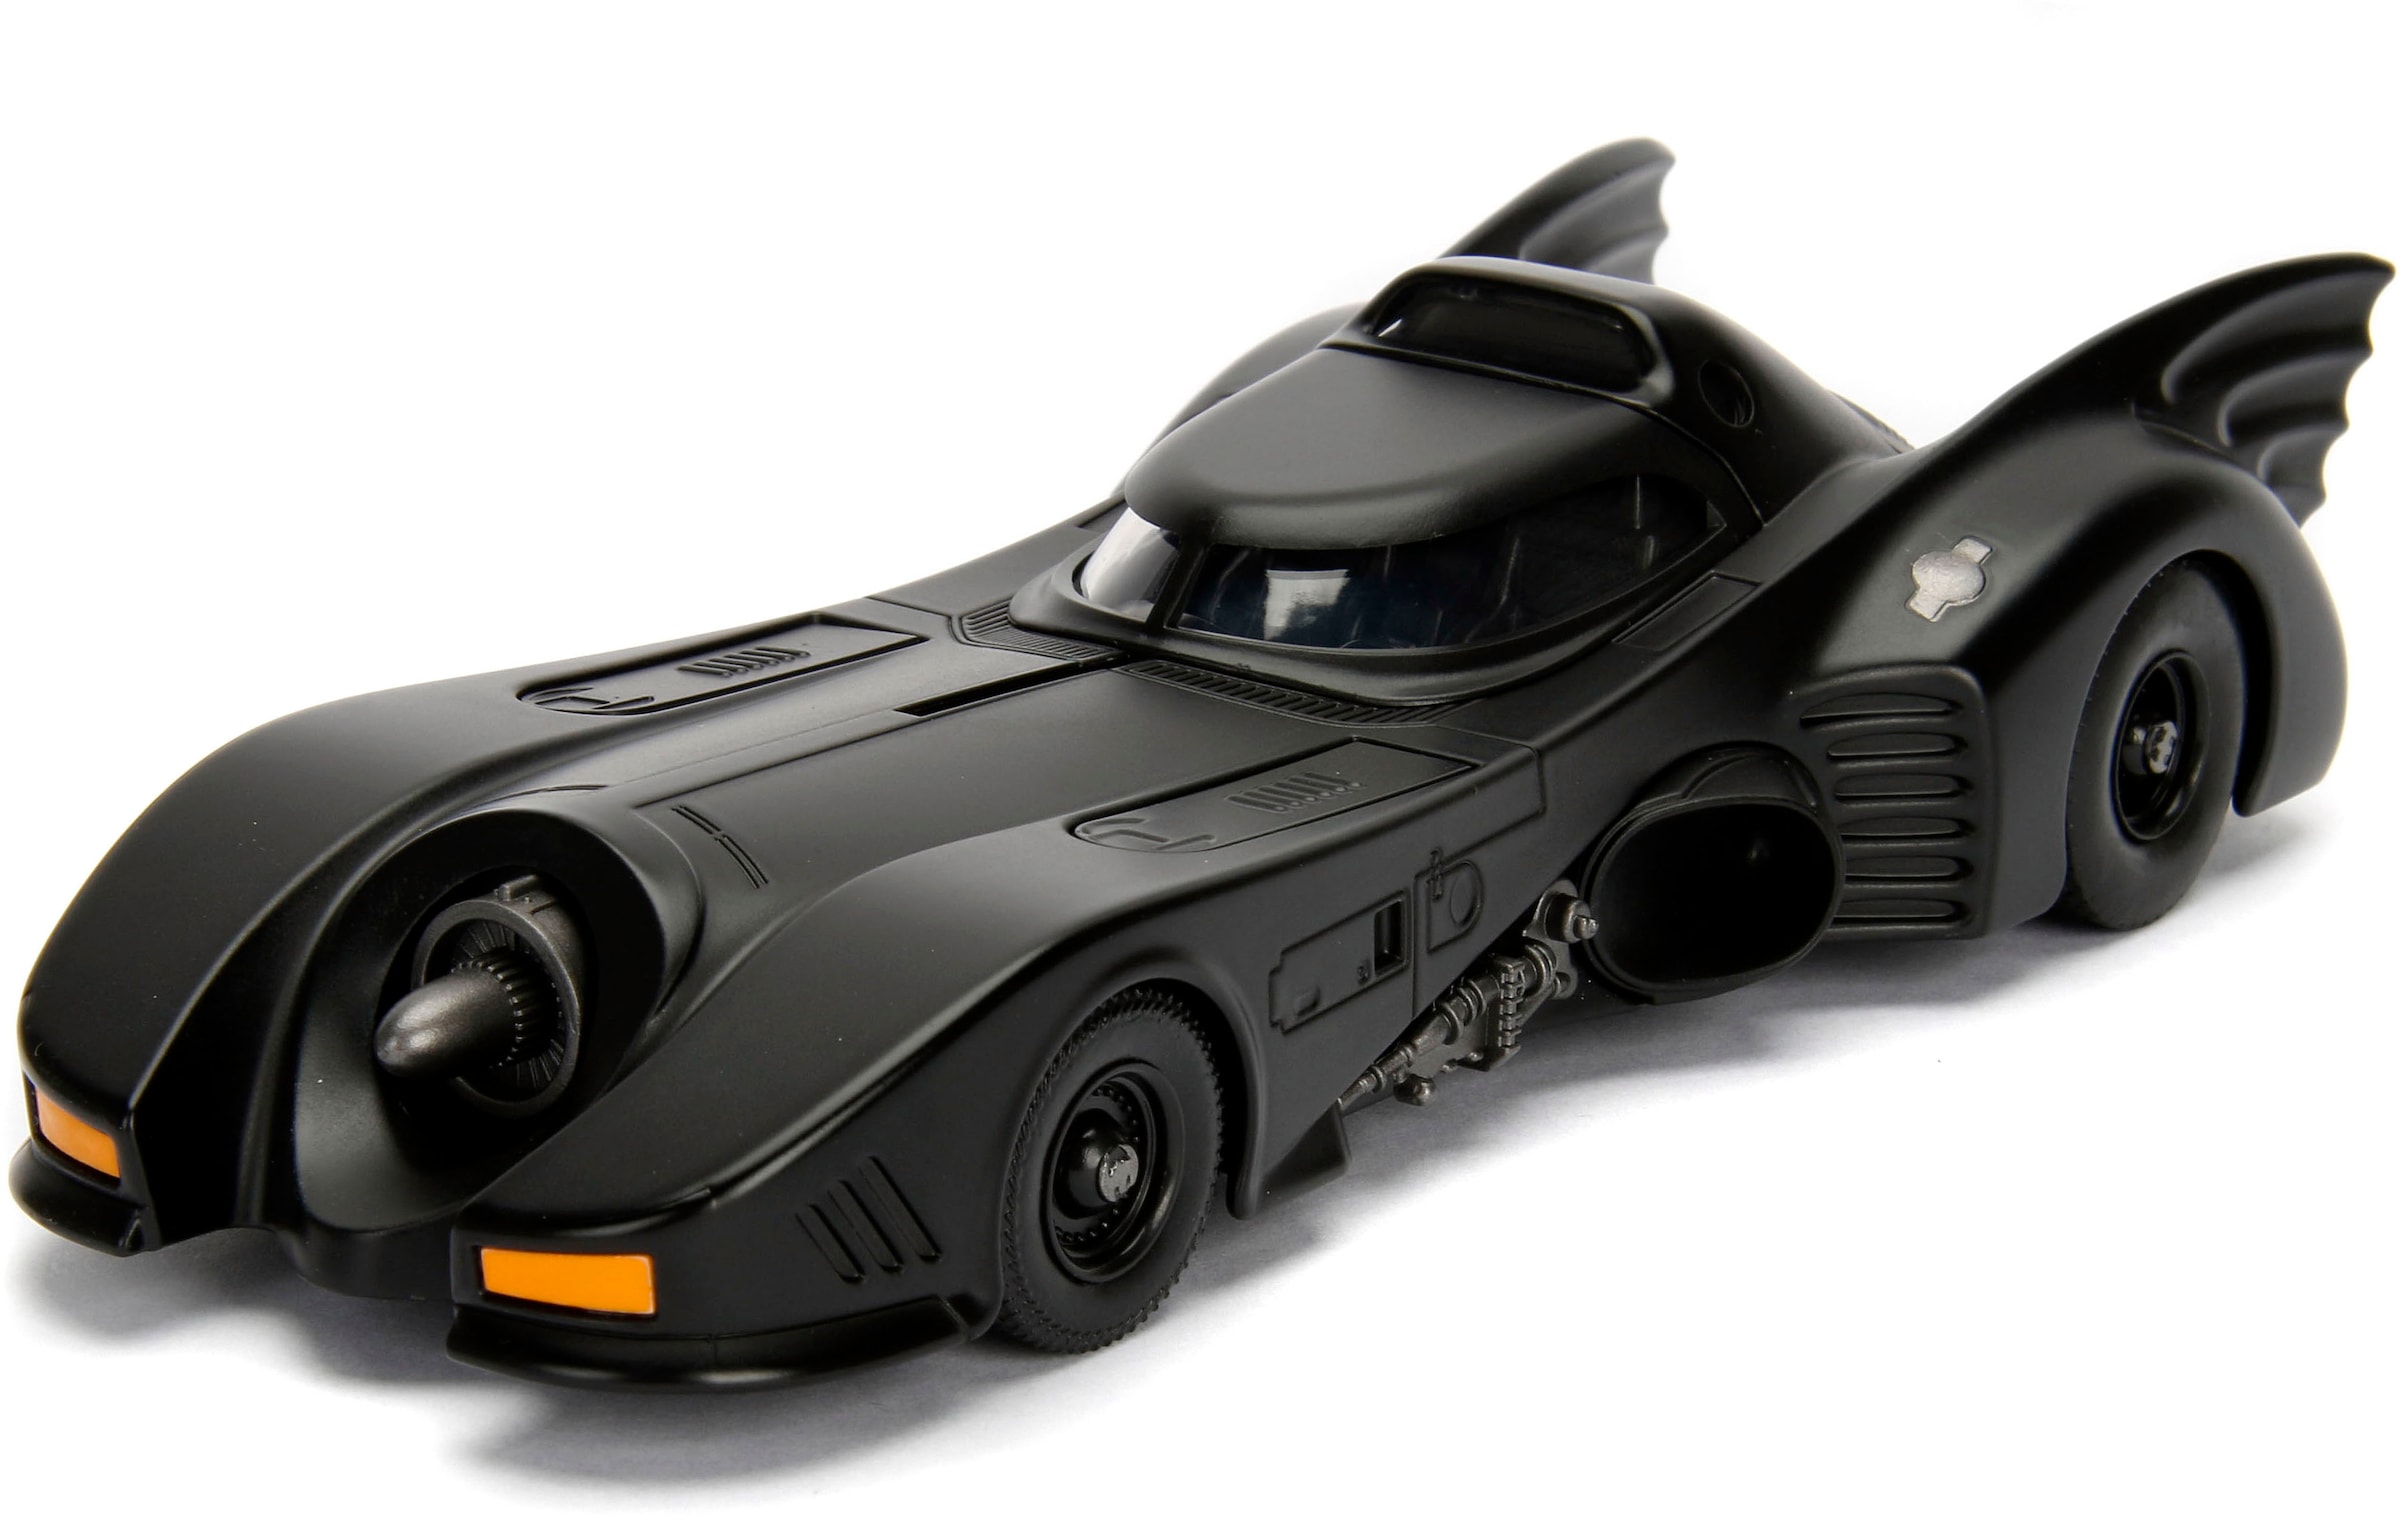 JADA Spielzeug-Auto »Batman 1989 Batmobil« jetzt im %Sale